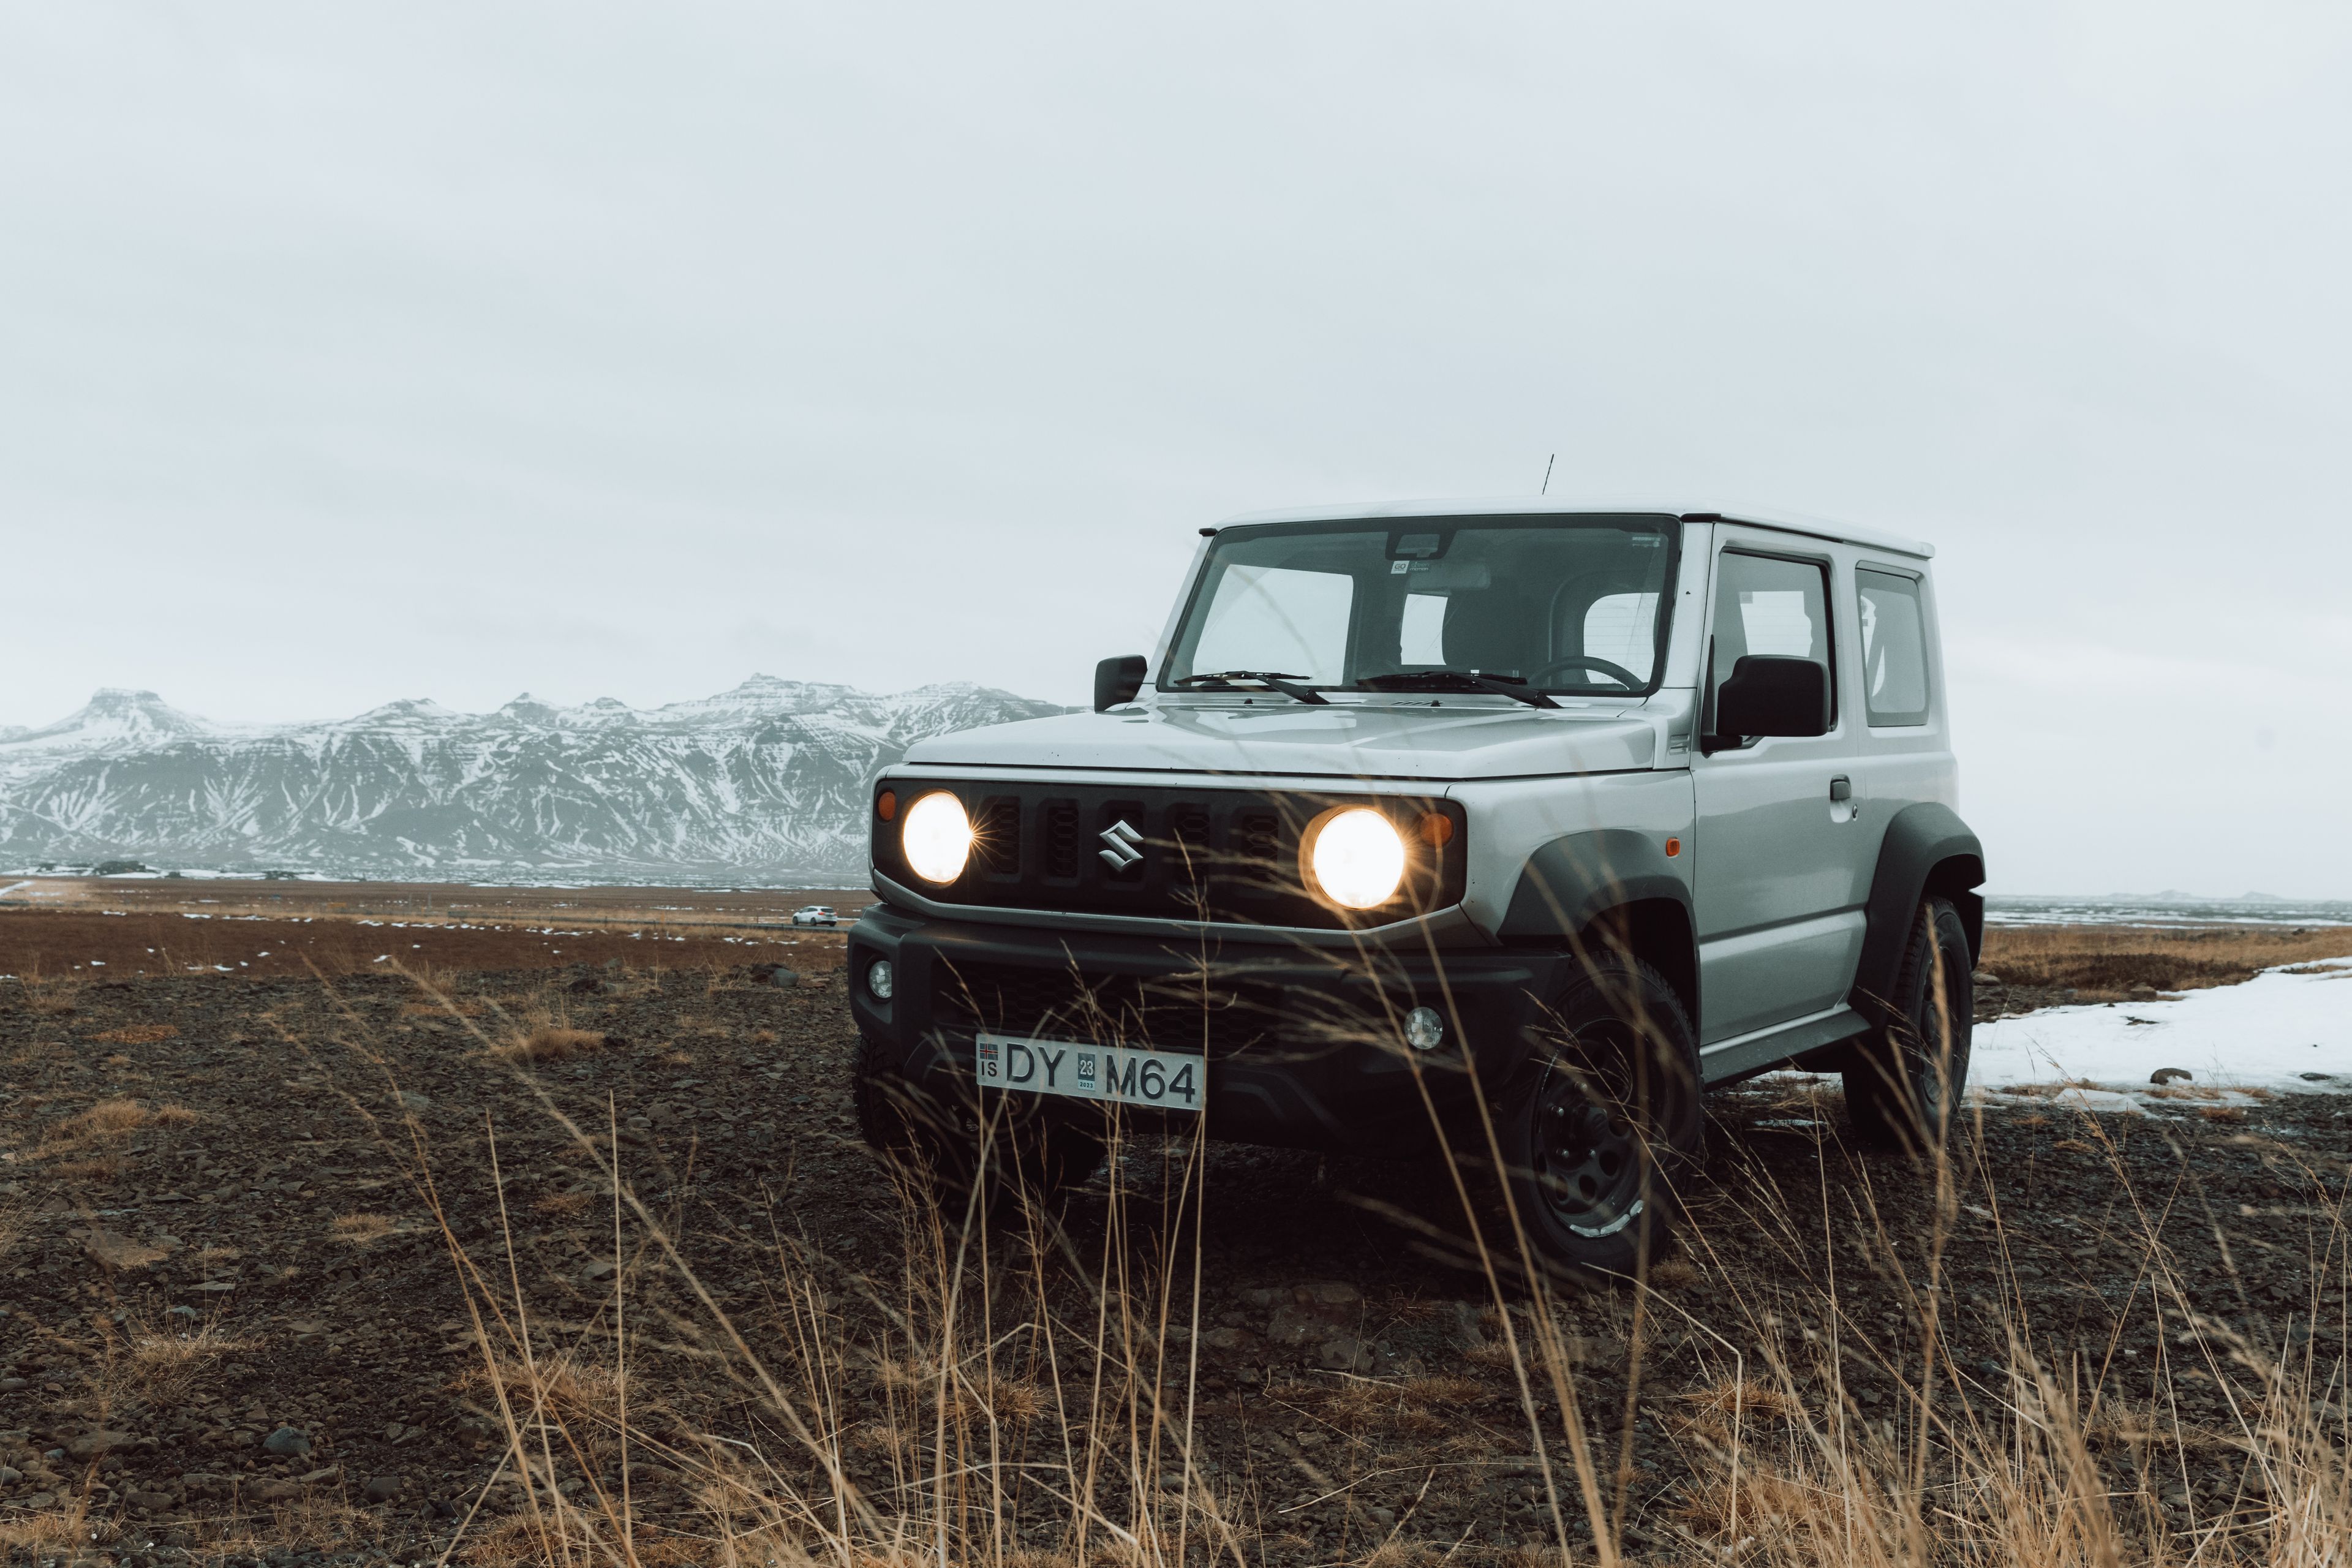 The Suzuki Jimny 4x4 in an Icelandic landscape